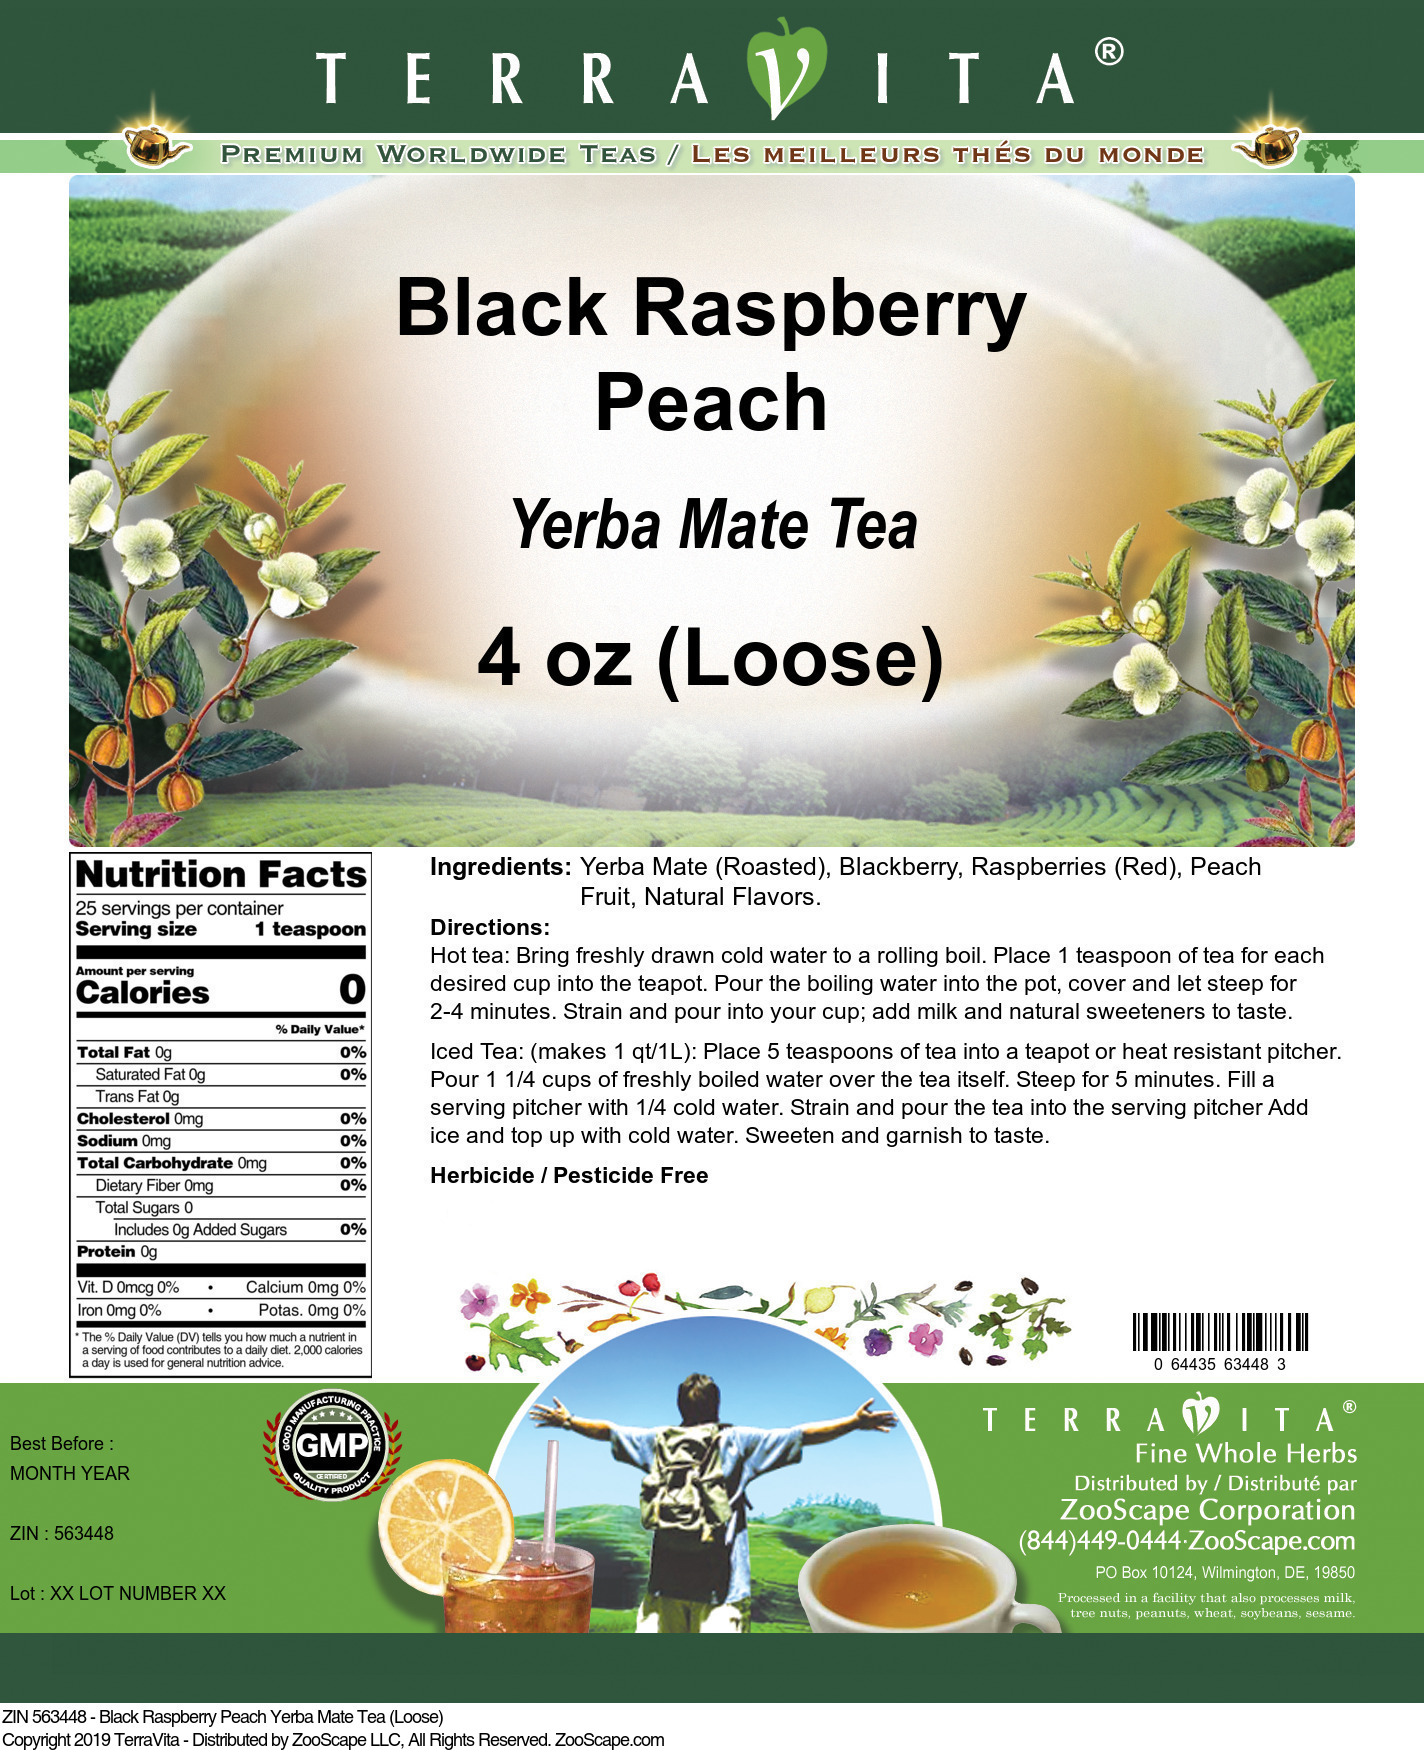 Black Raspberry Peach Yerba Mate Tea (Loose) - Label